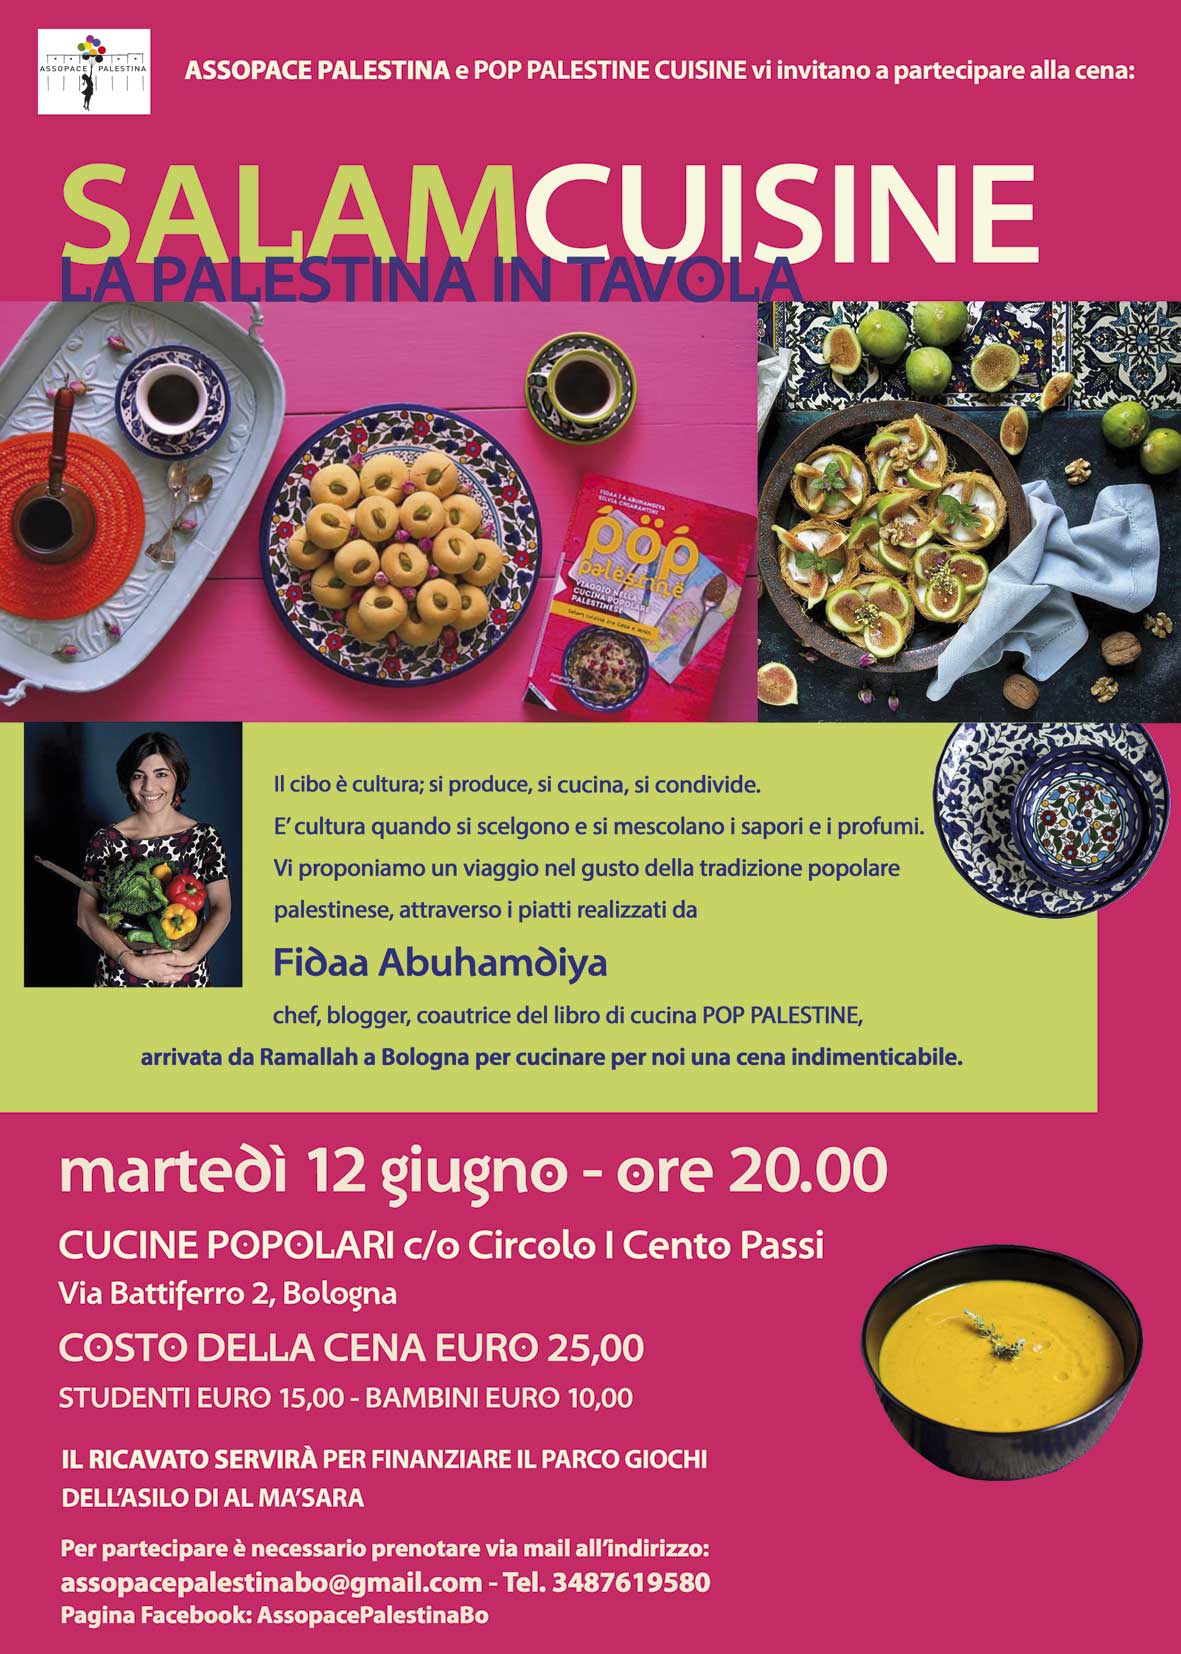 Bologna 12 giugno: Cena con la Chef Palestinese Fidaa Abuhamdiya.